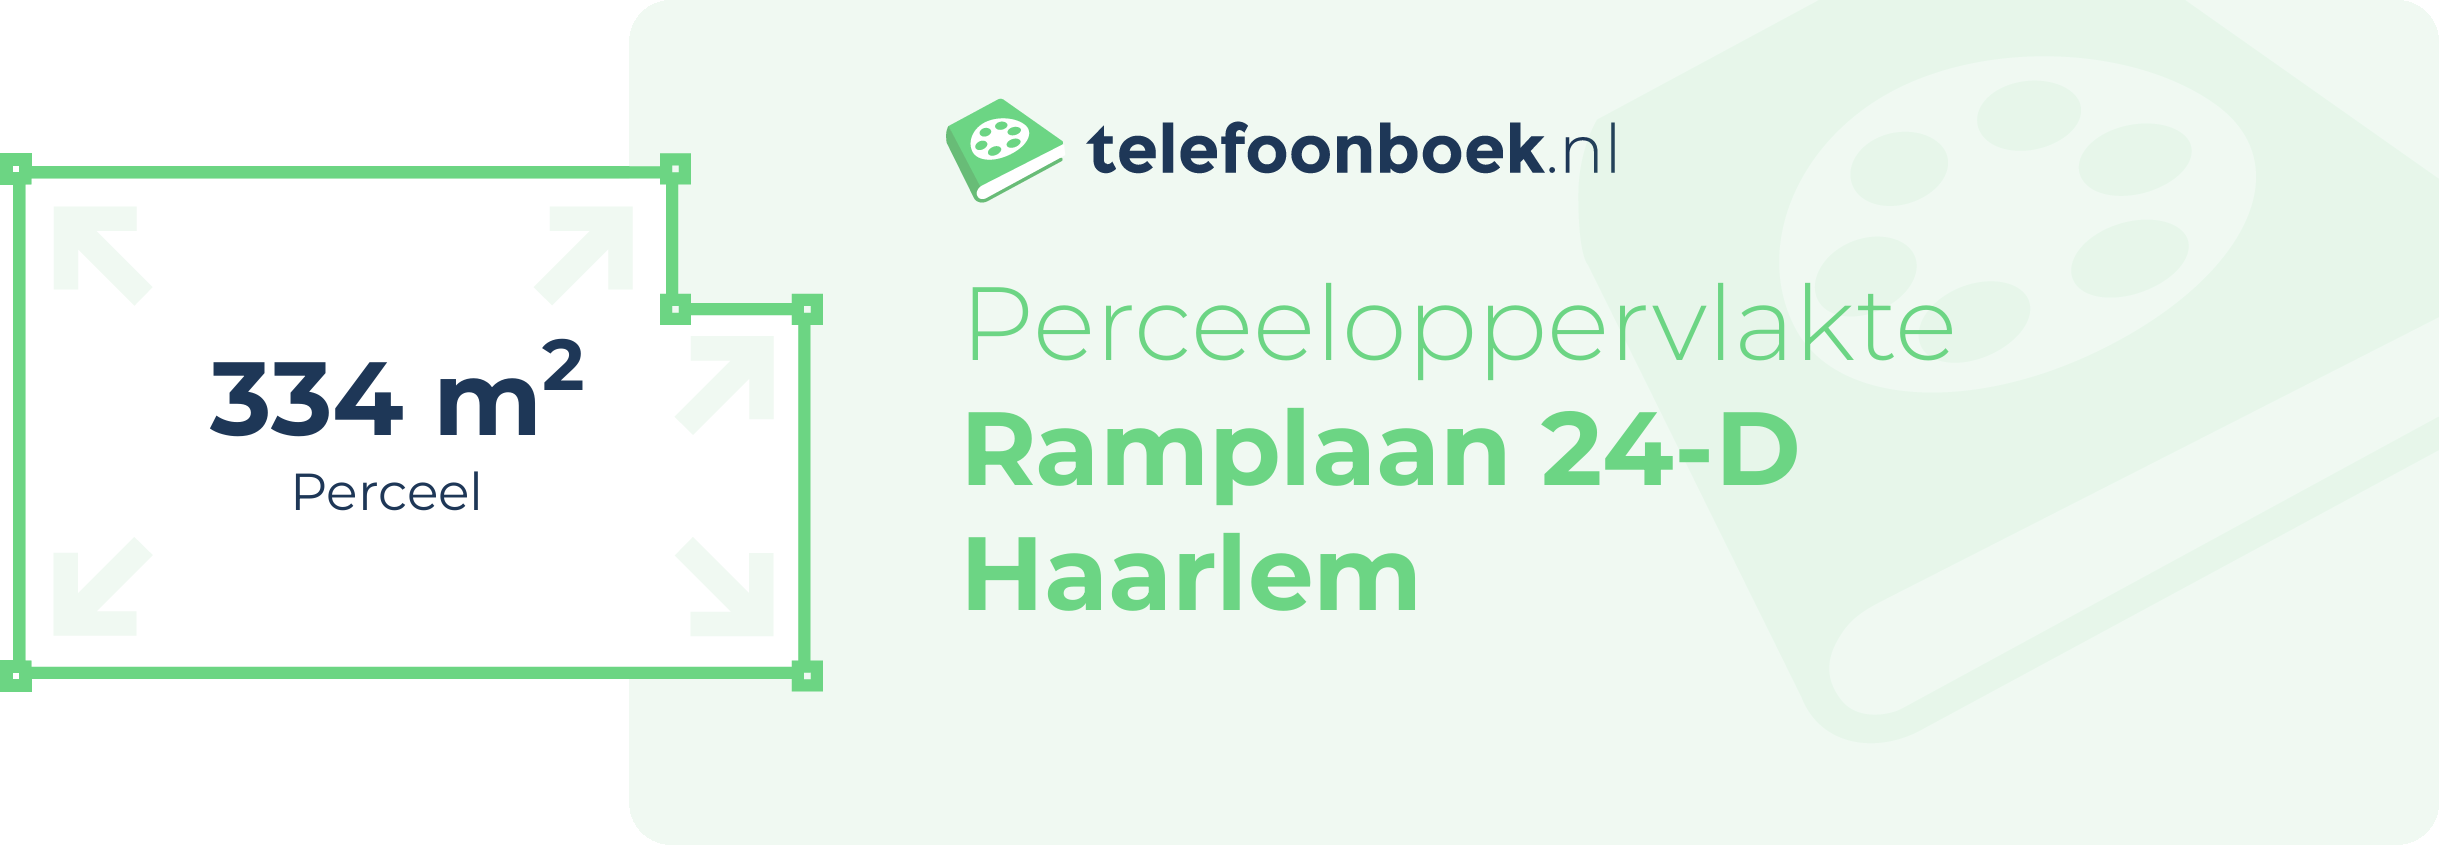 Perceeloppervlakte Ramplaan 24-D Haarlem